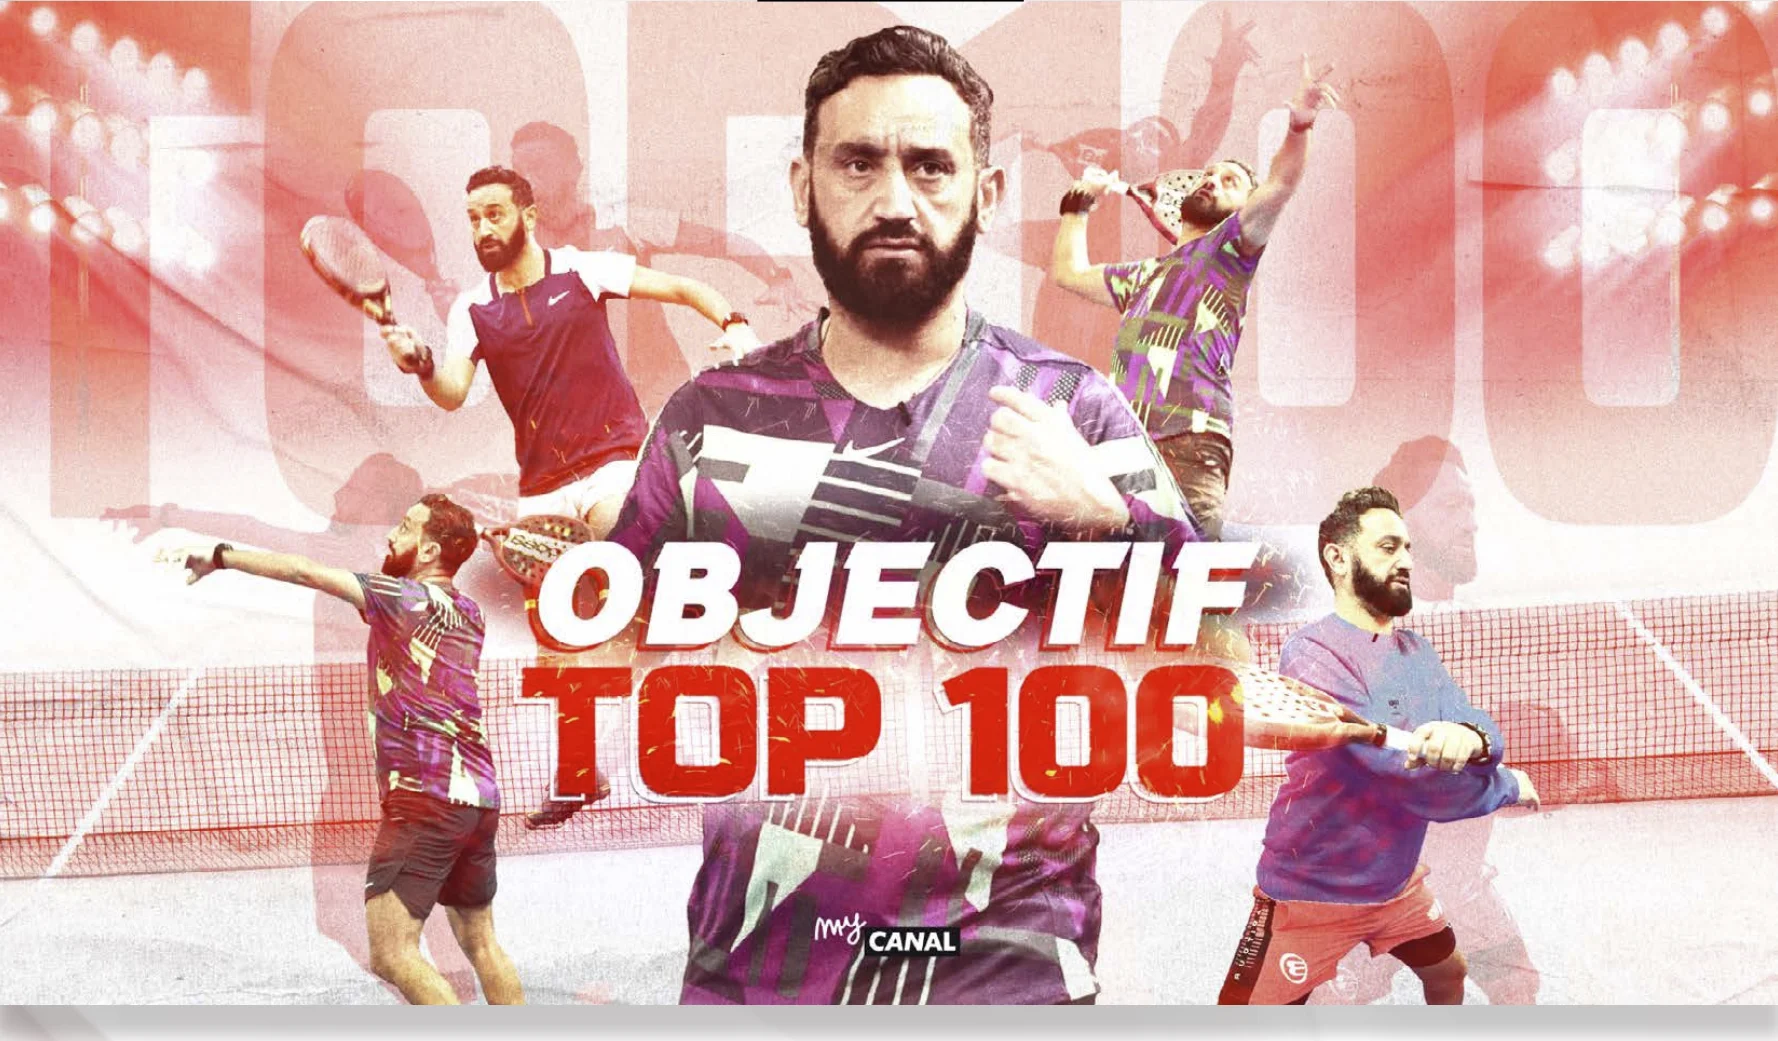 Cyril Hanouna mål topp 100 säsong 2